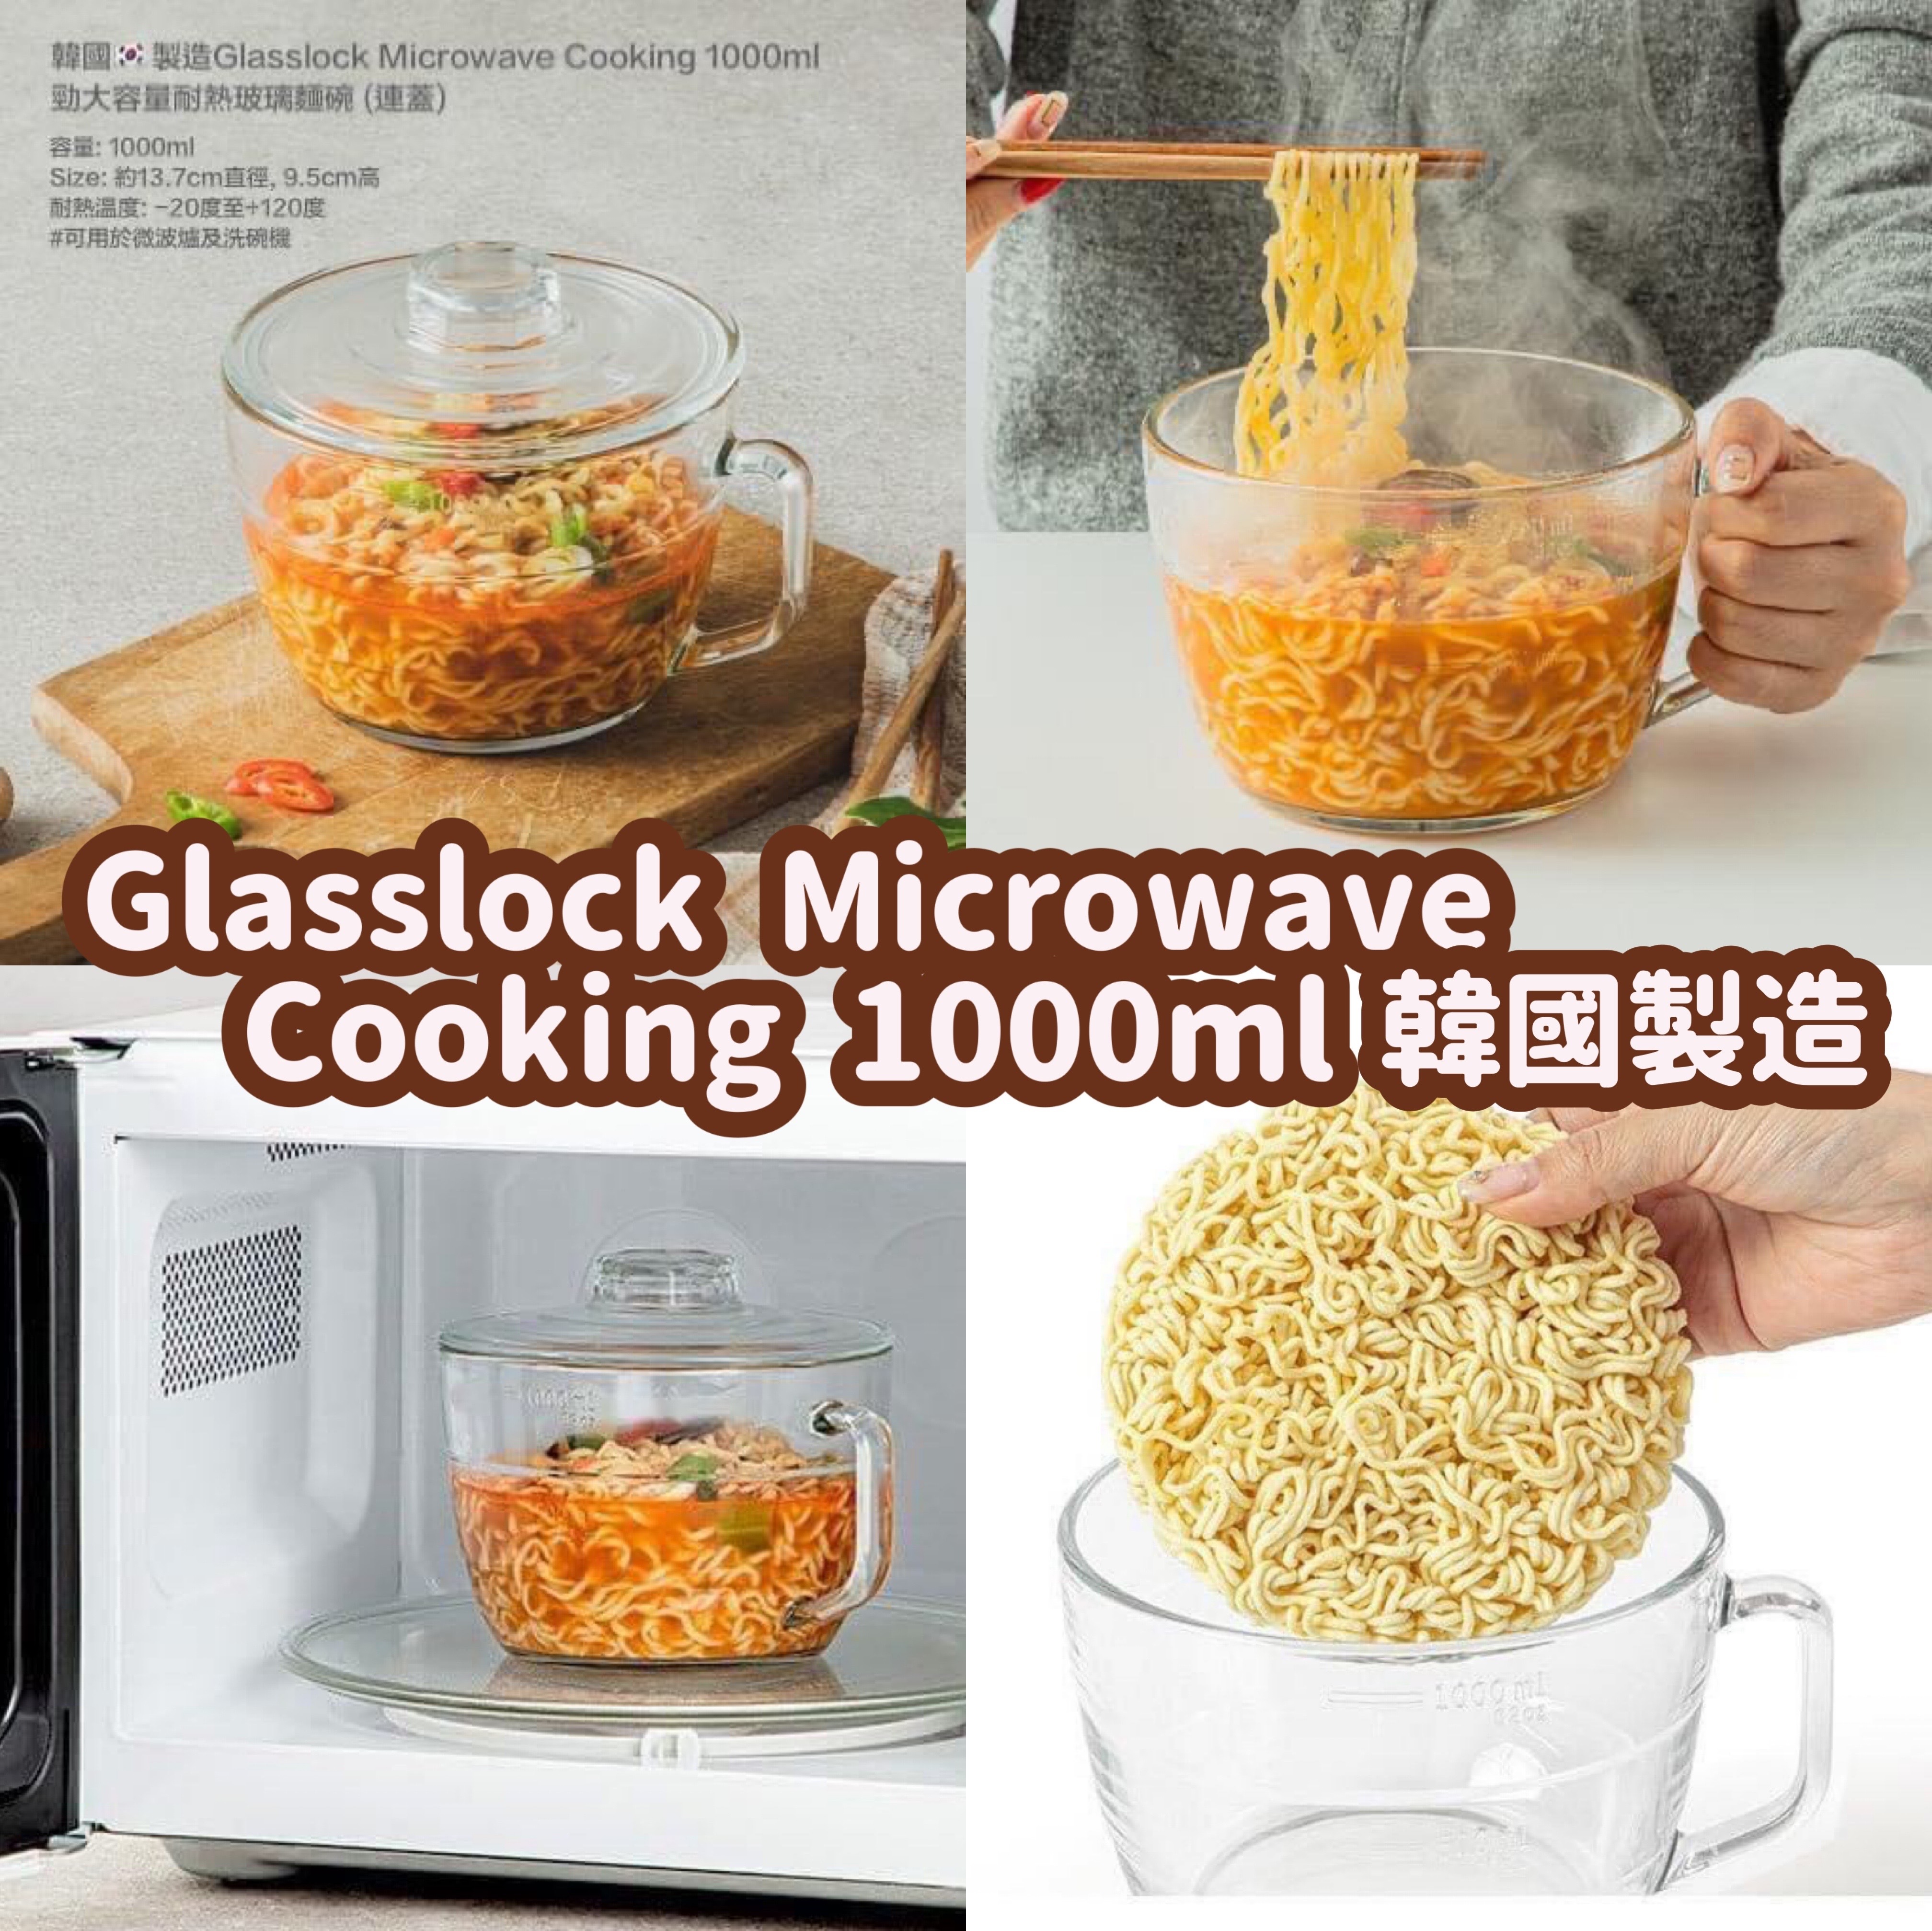 韓國🇰🇷製造Glasslock Microwave Cooking 1000ml